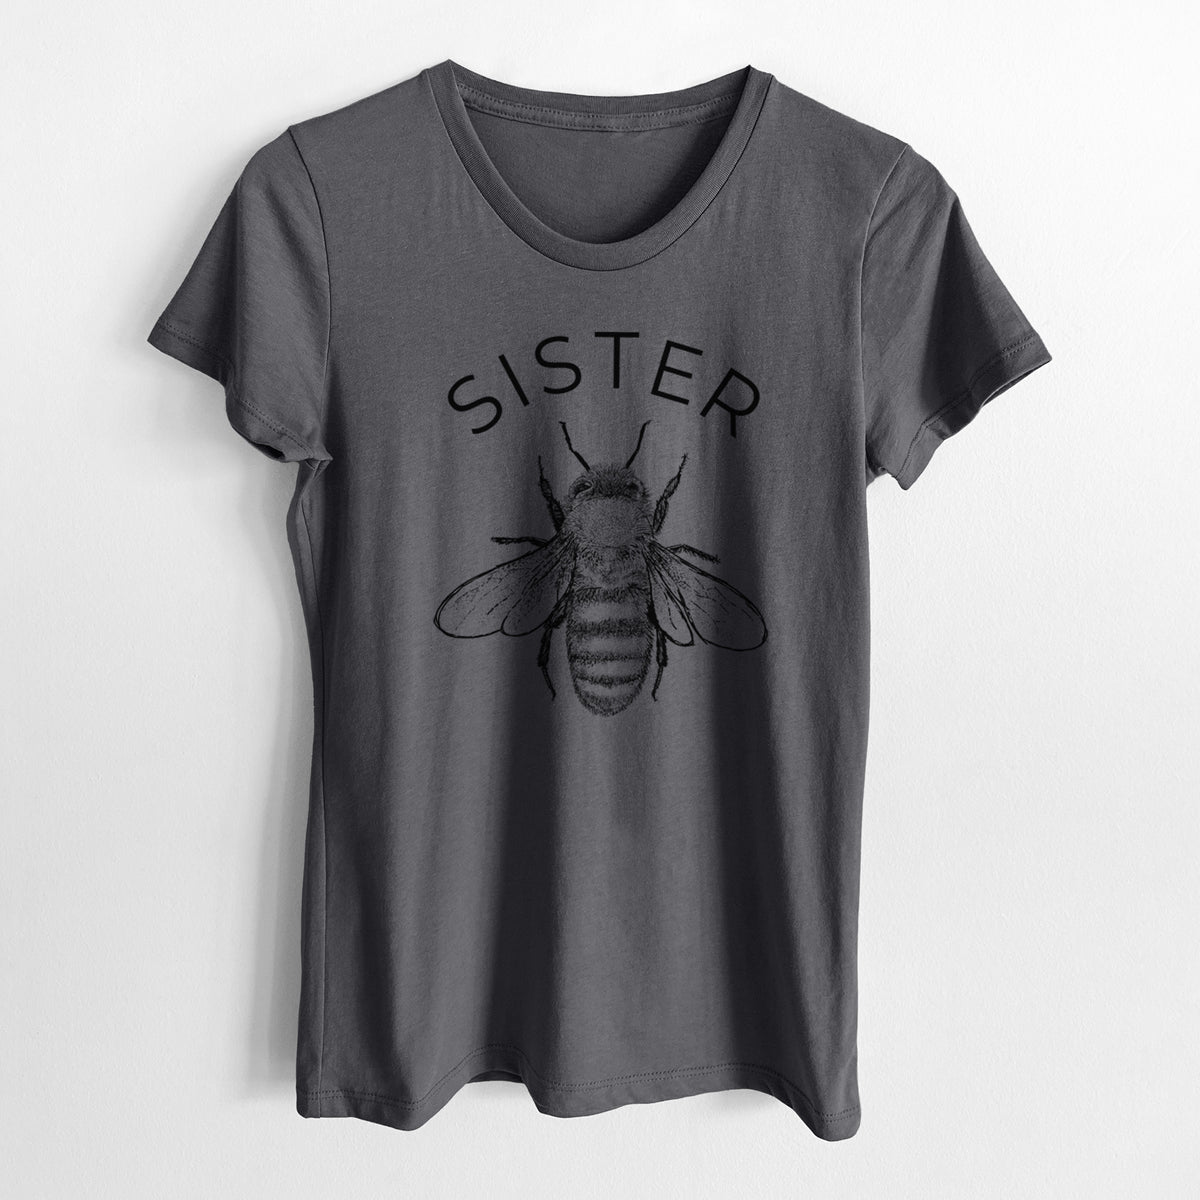 Sister Bee - Women&#39;s Crewneck - Made in USA - 100% Organic Cotton